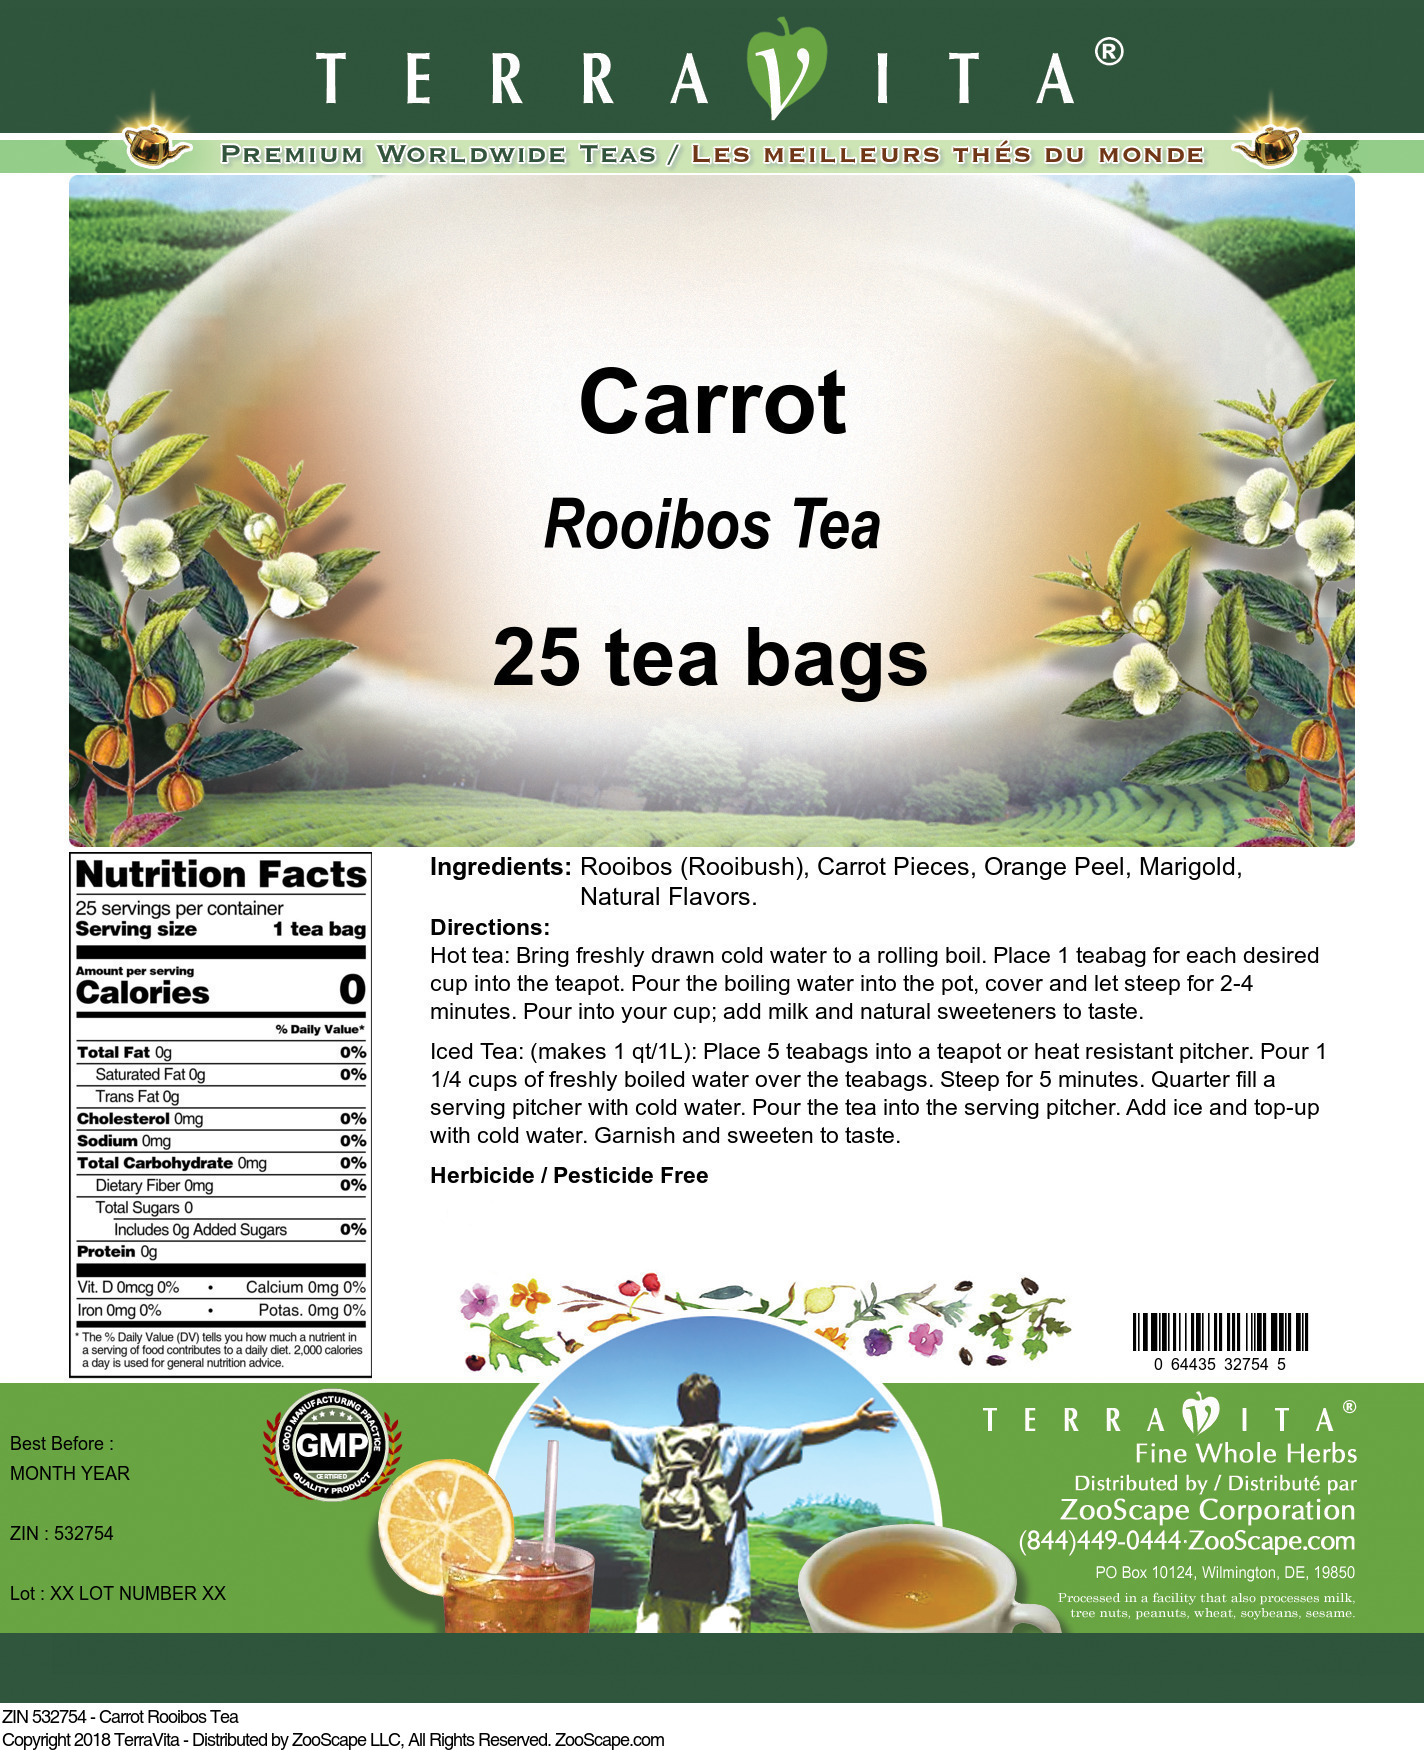 Carrot Rooibos Tea - Label